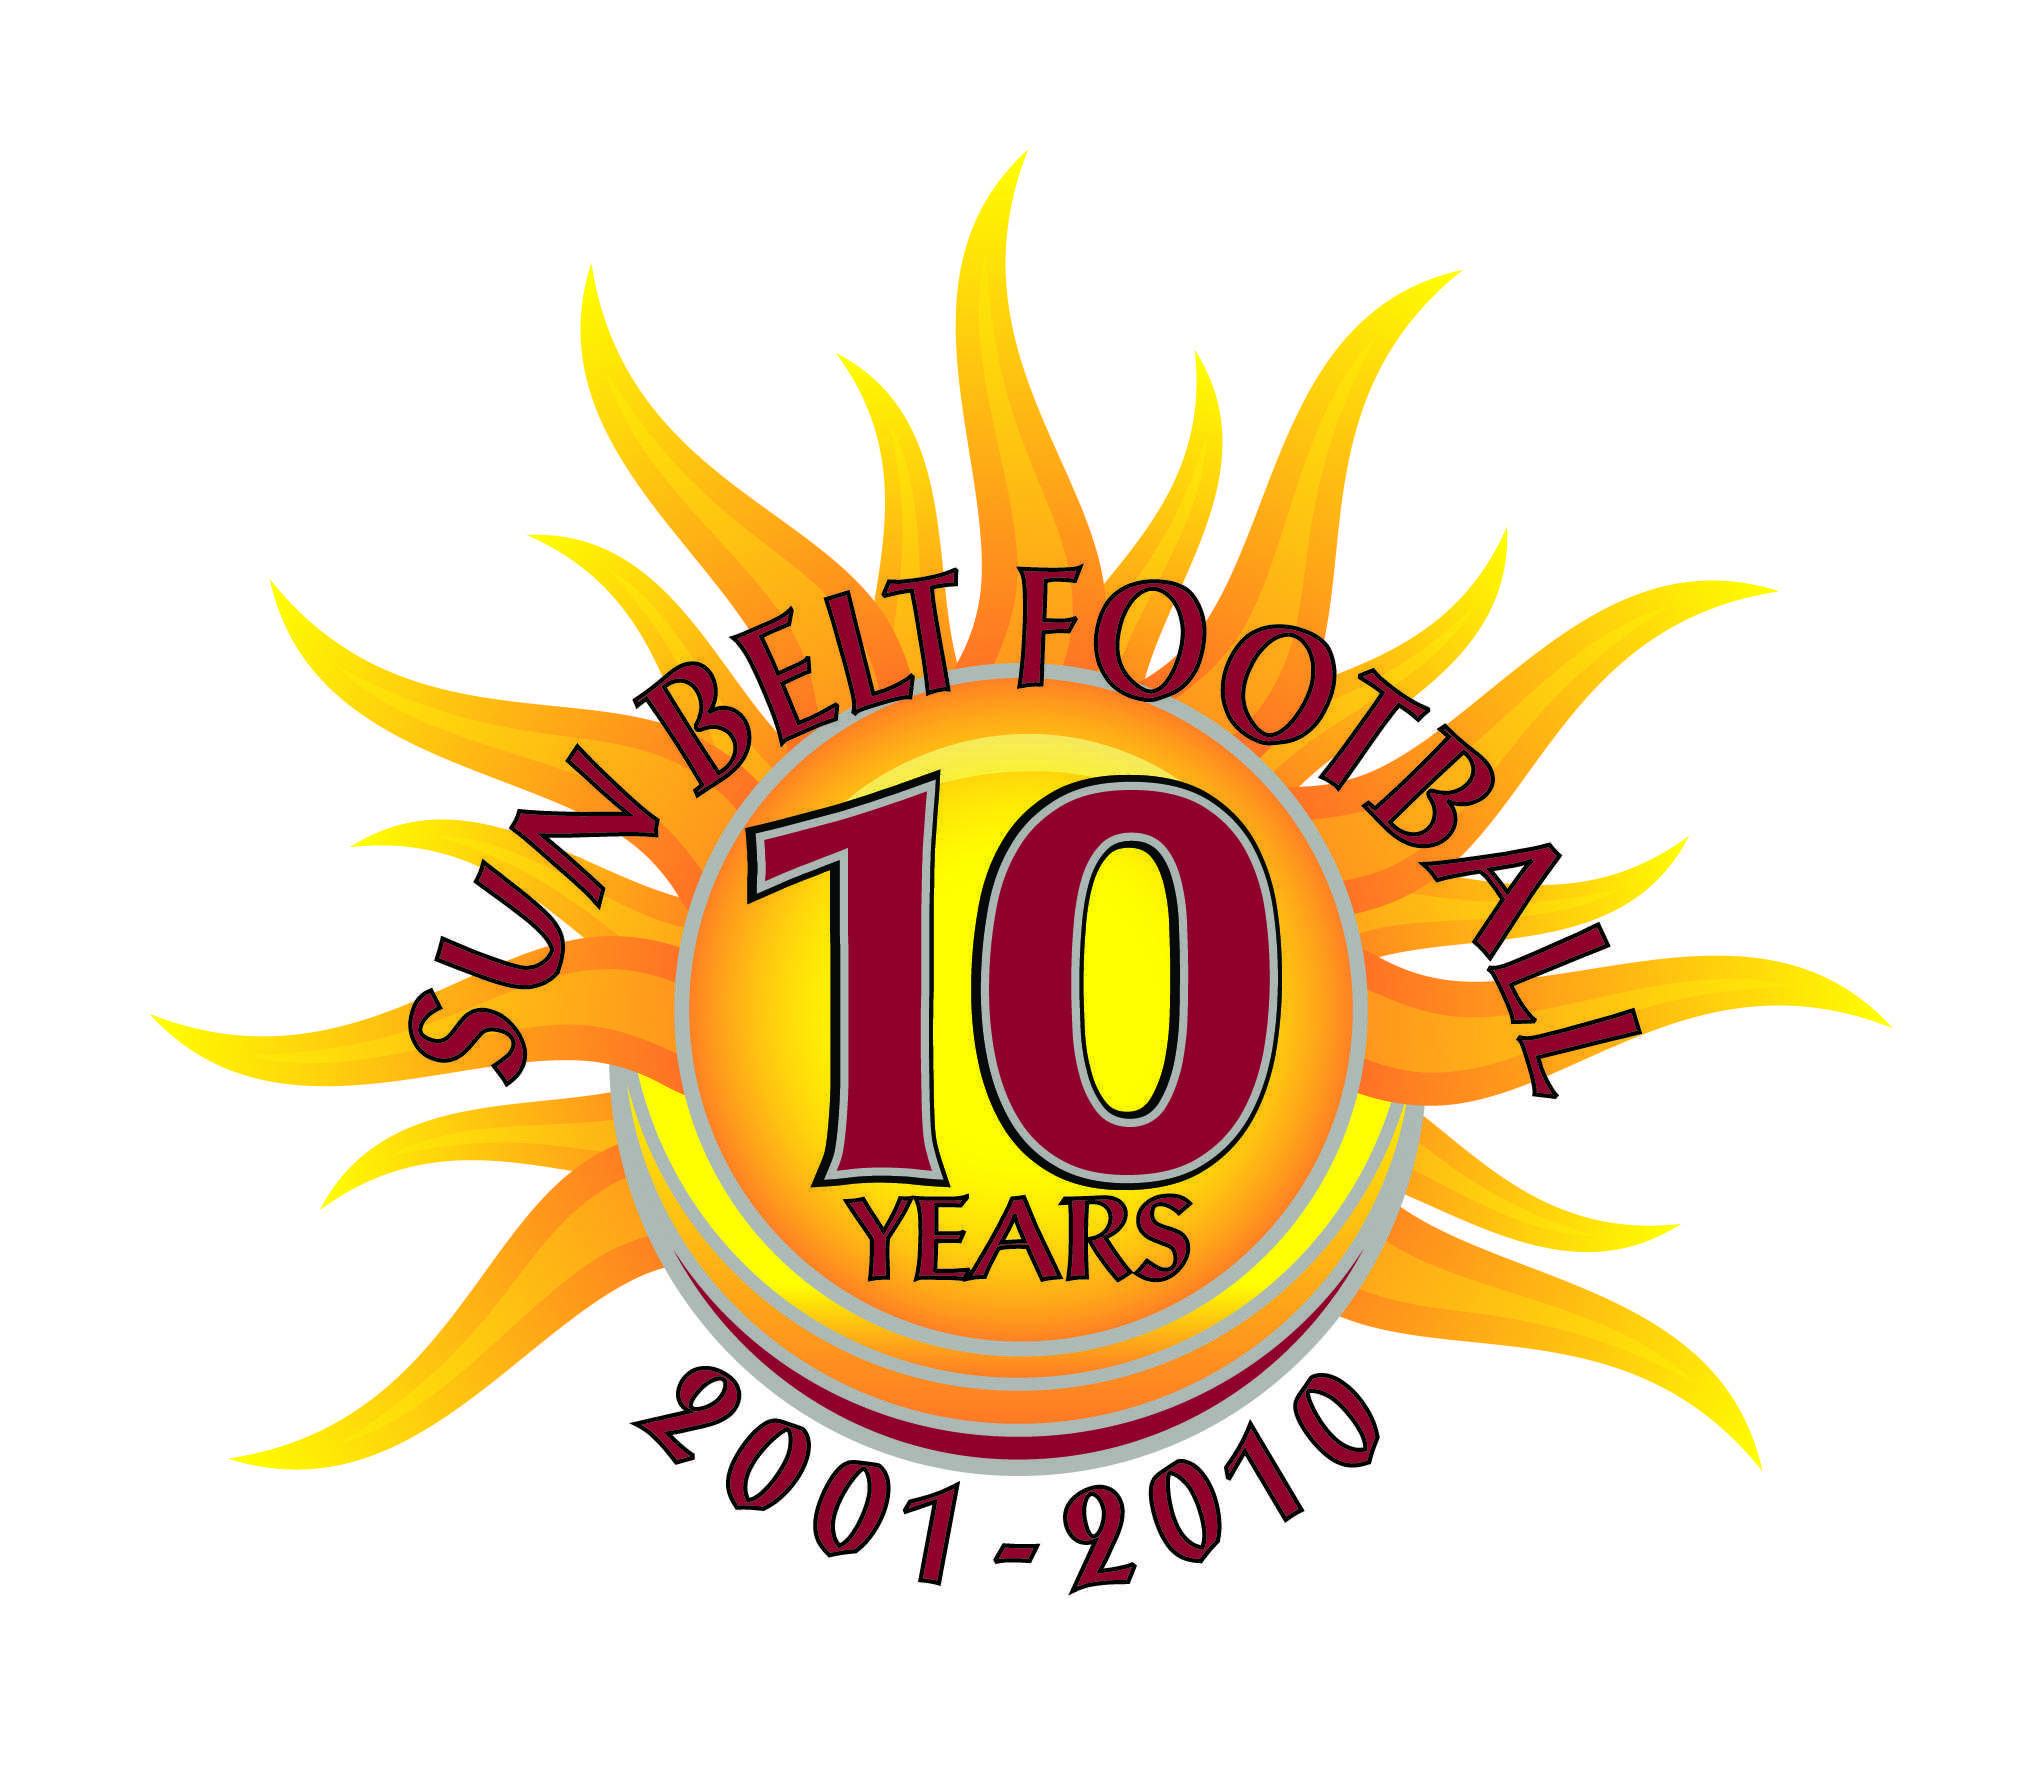 Sunbelt Logo - sunbelt logo